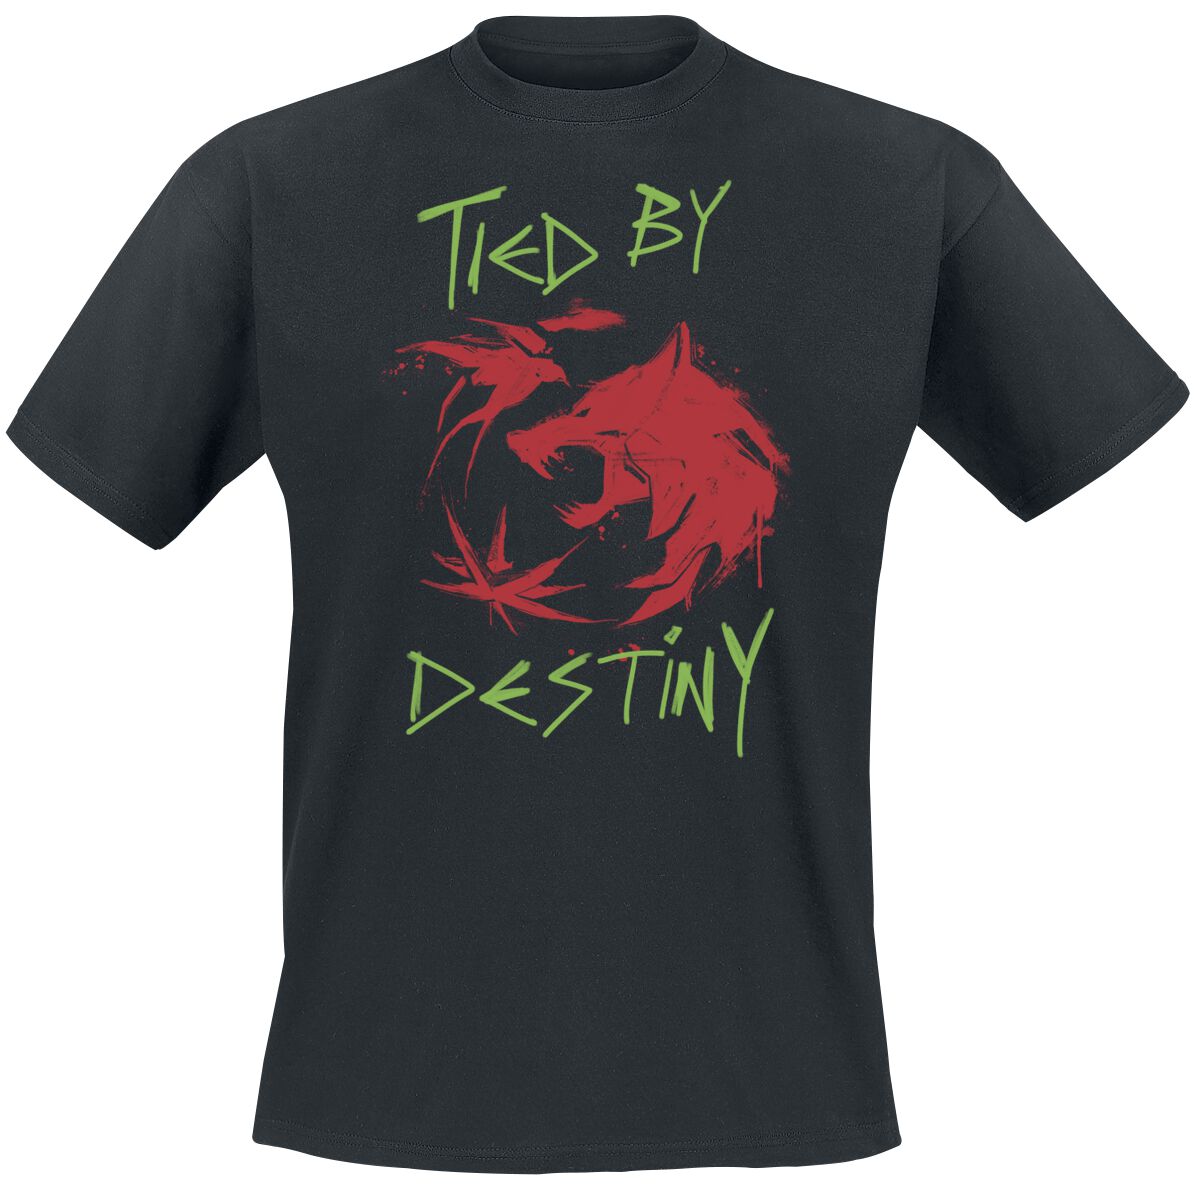 The Witcher Season 3 - Destiny T-Shirt schwarz in M